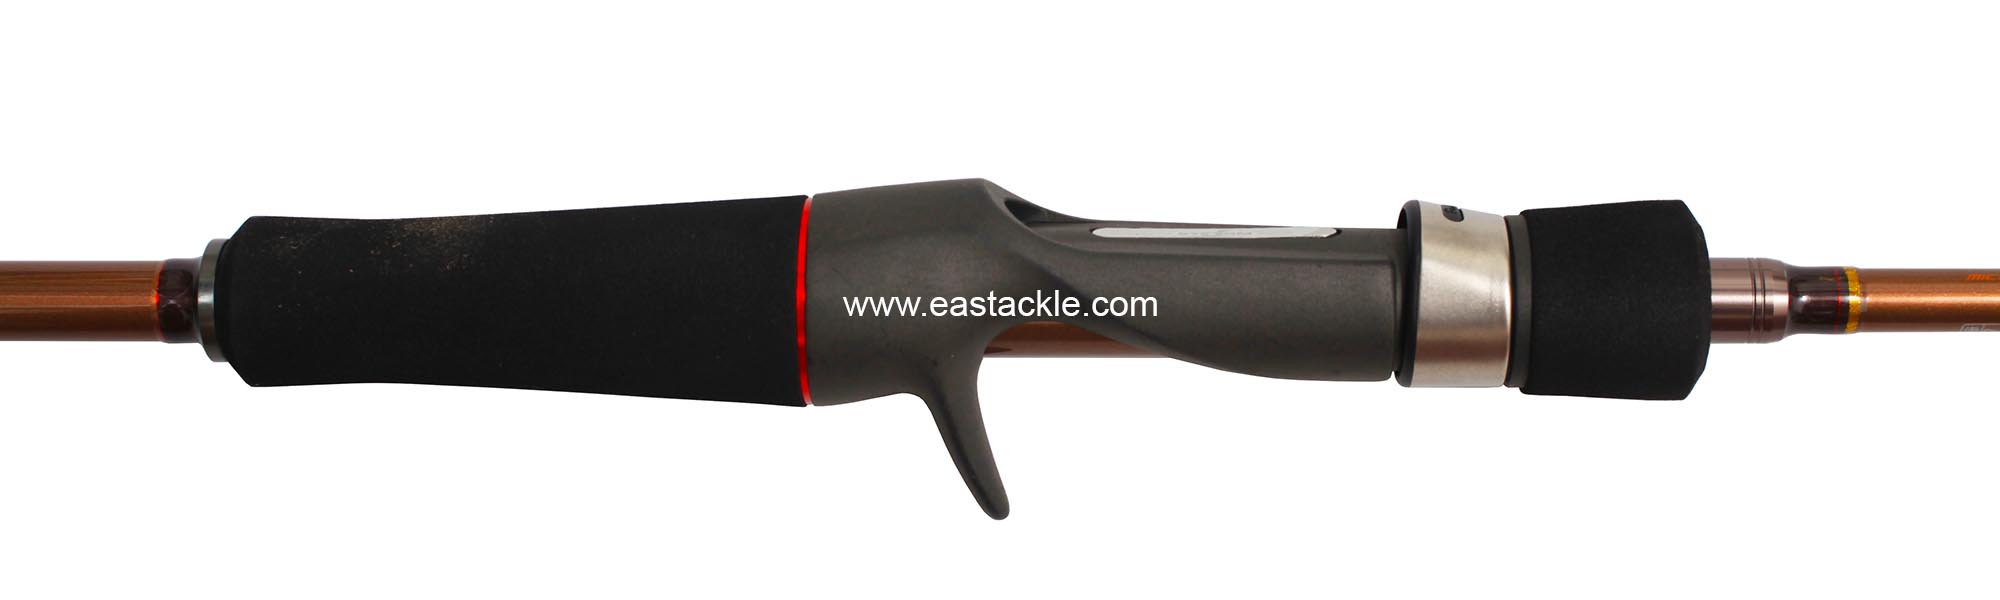 Storm - Teenie - TNC641UL - Bait Casting Rod - Reel Seat (Side View) | Eastackle